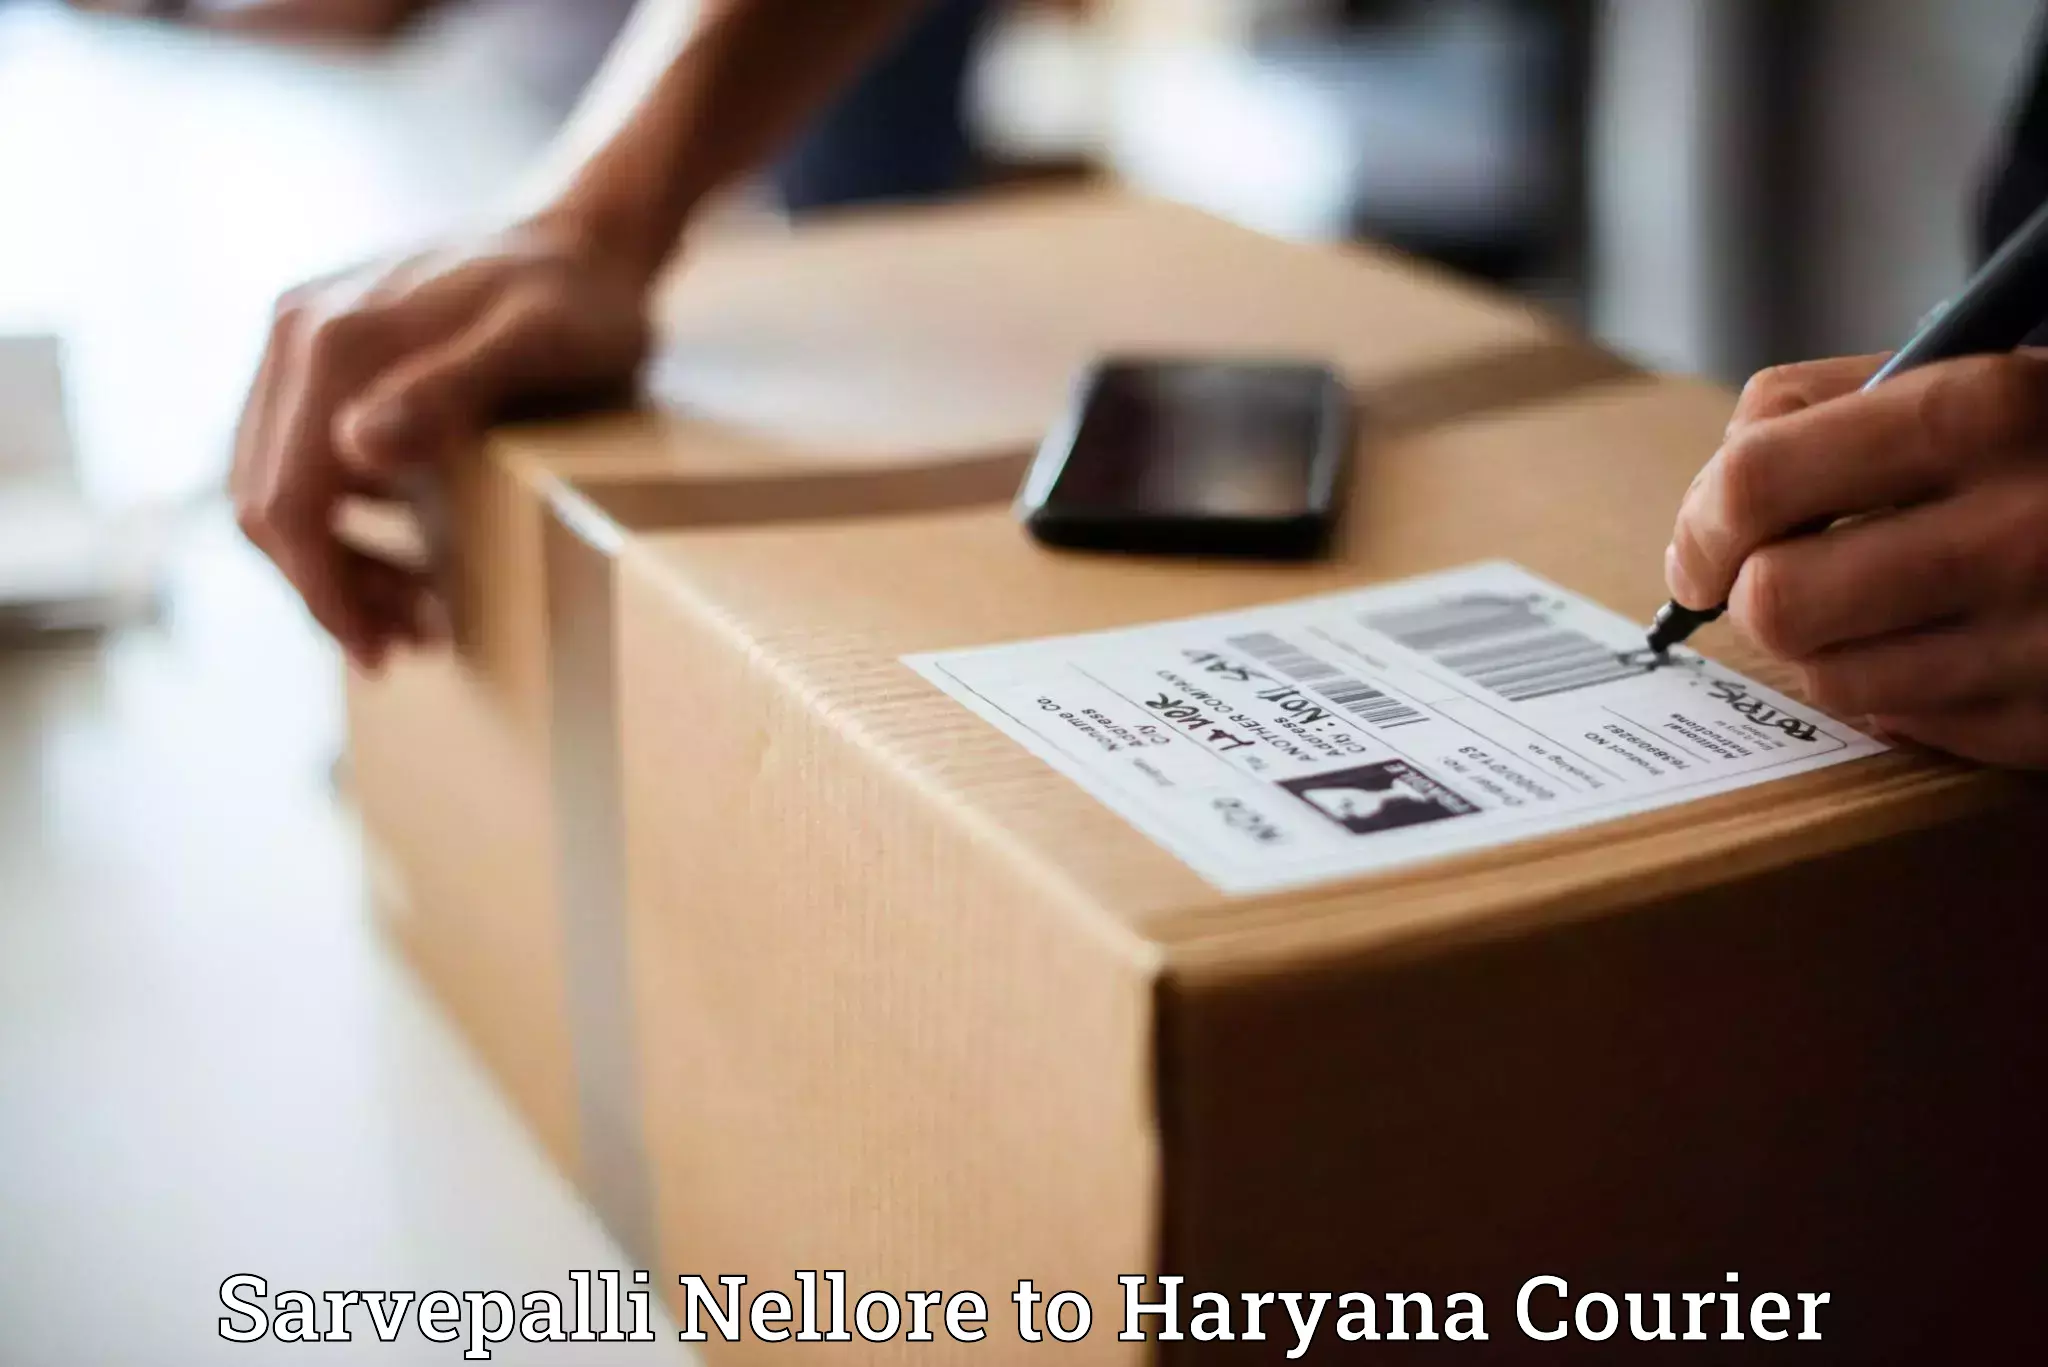 Customer-centric shipping Sarvepalli Nellore to Bilaspur Haryana